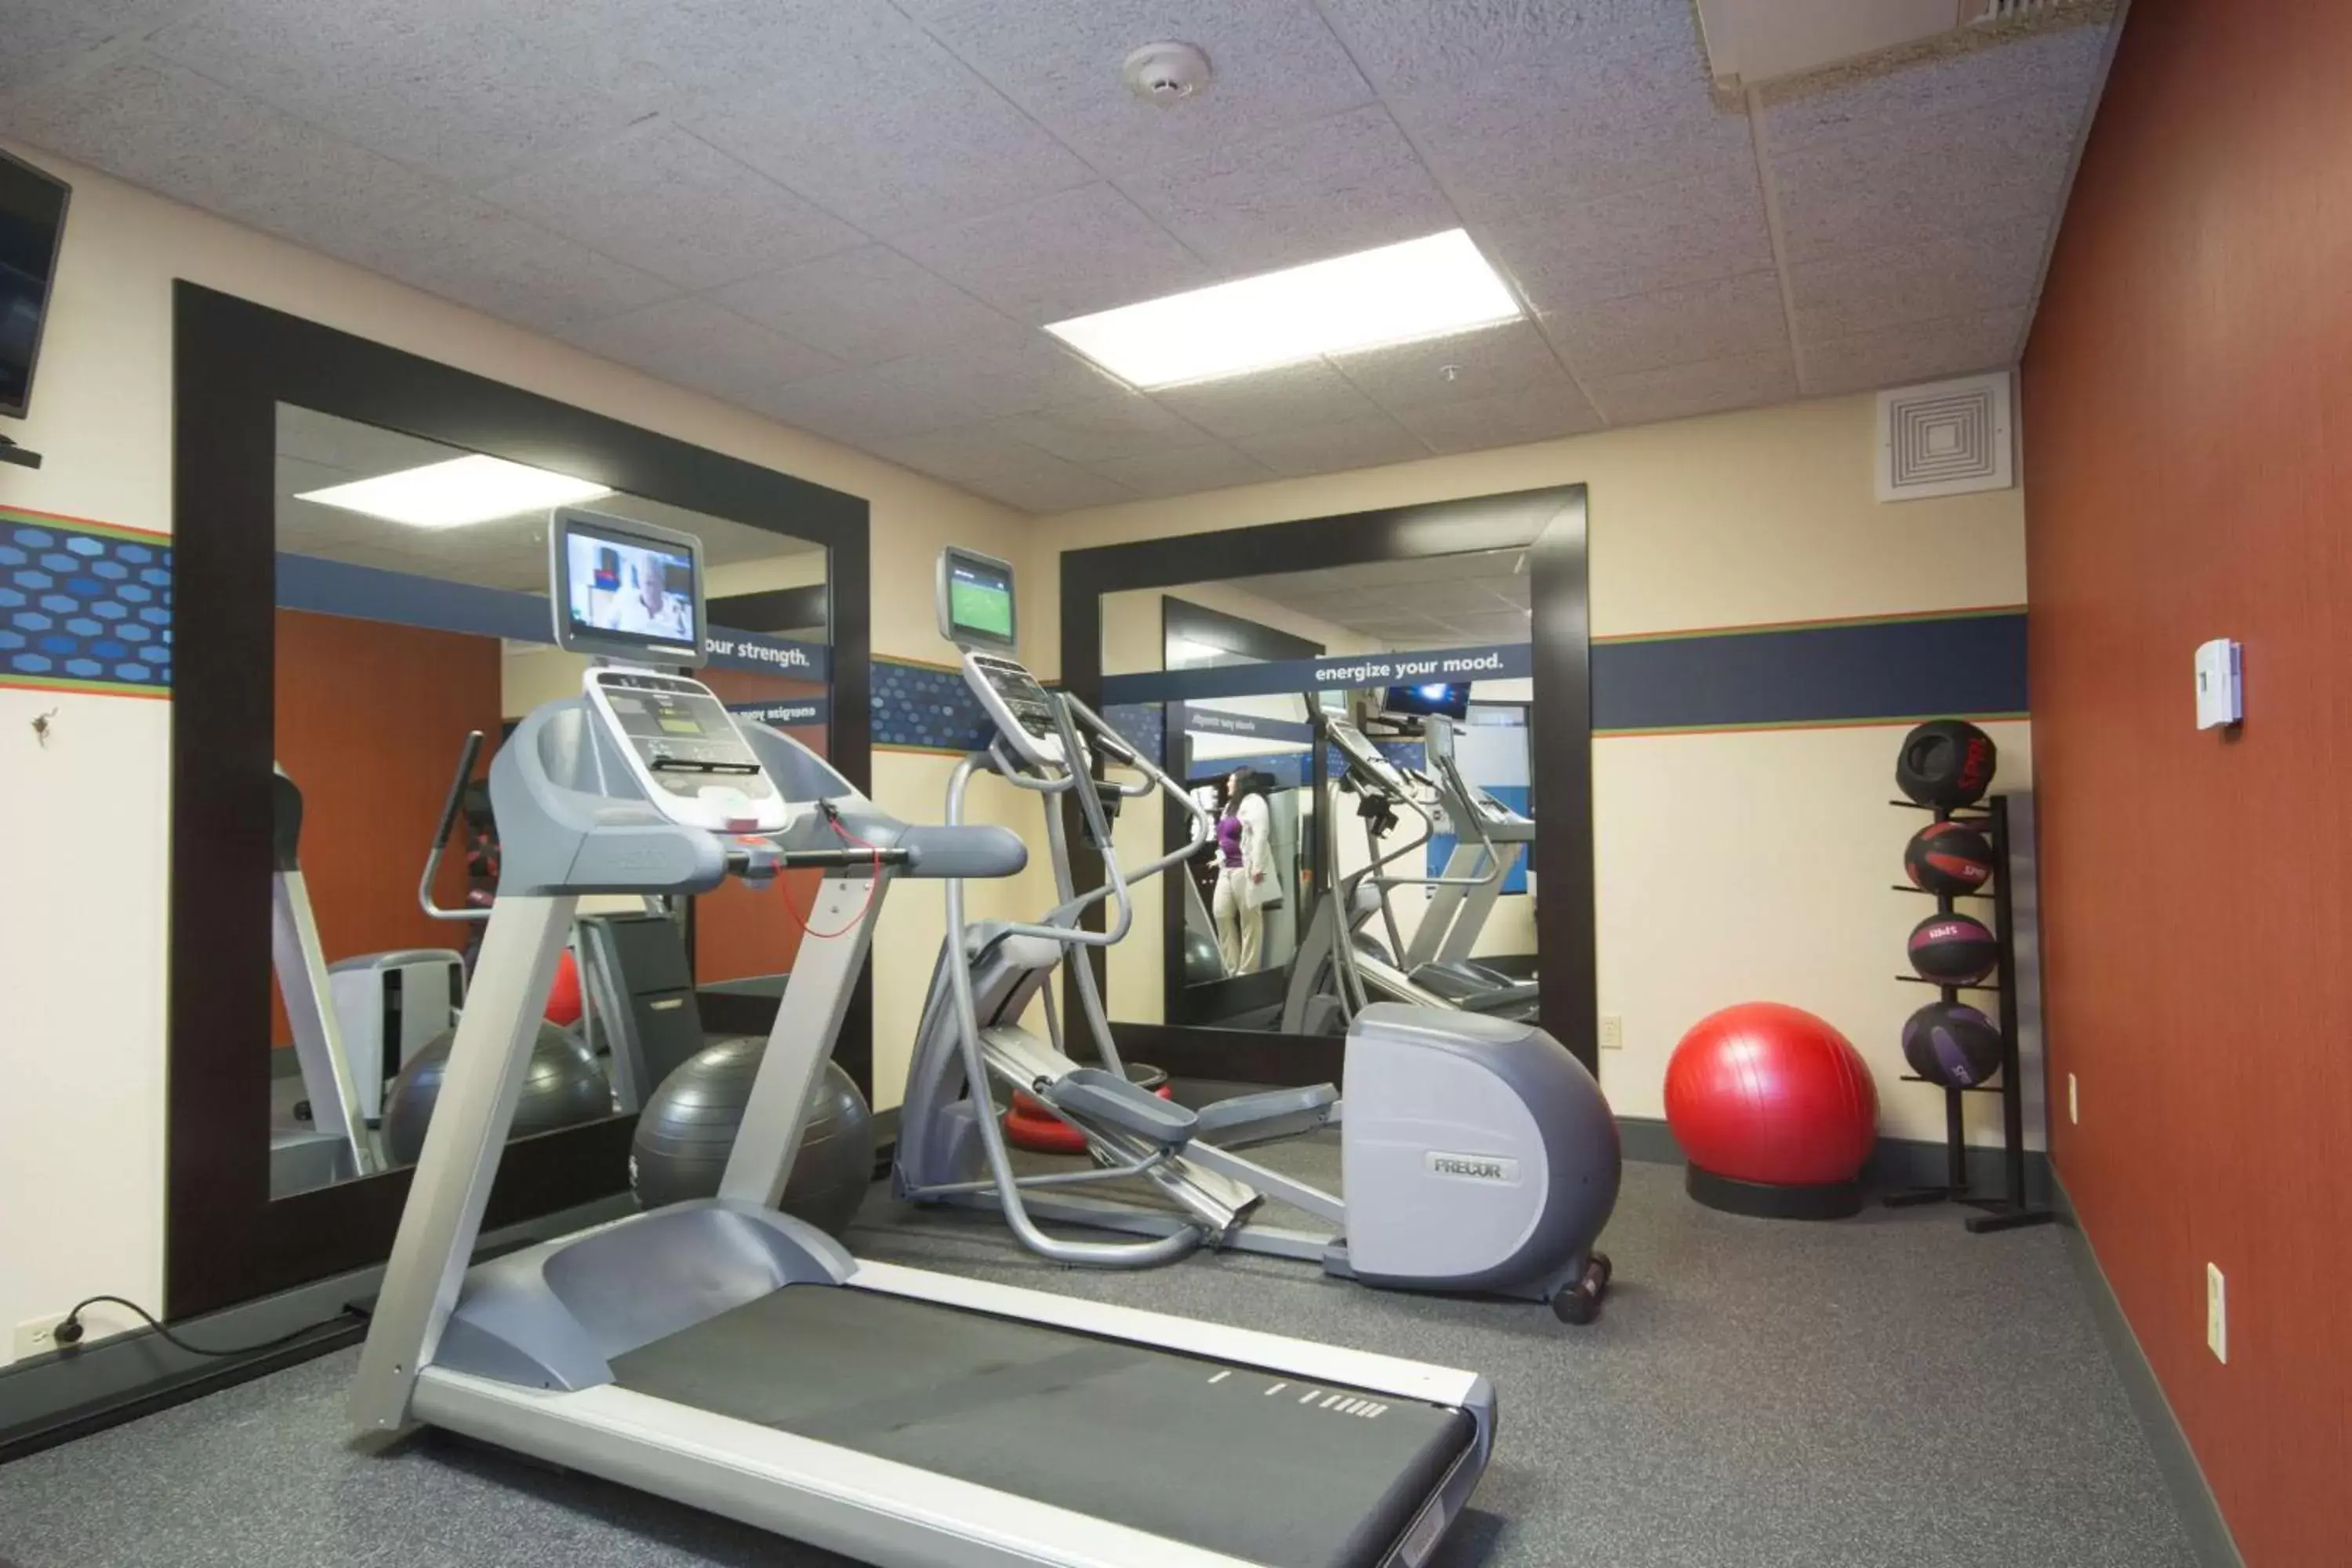 Fitness centre/facilities, Fitness Center/Facilities in Hampton Inn Marshall